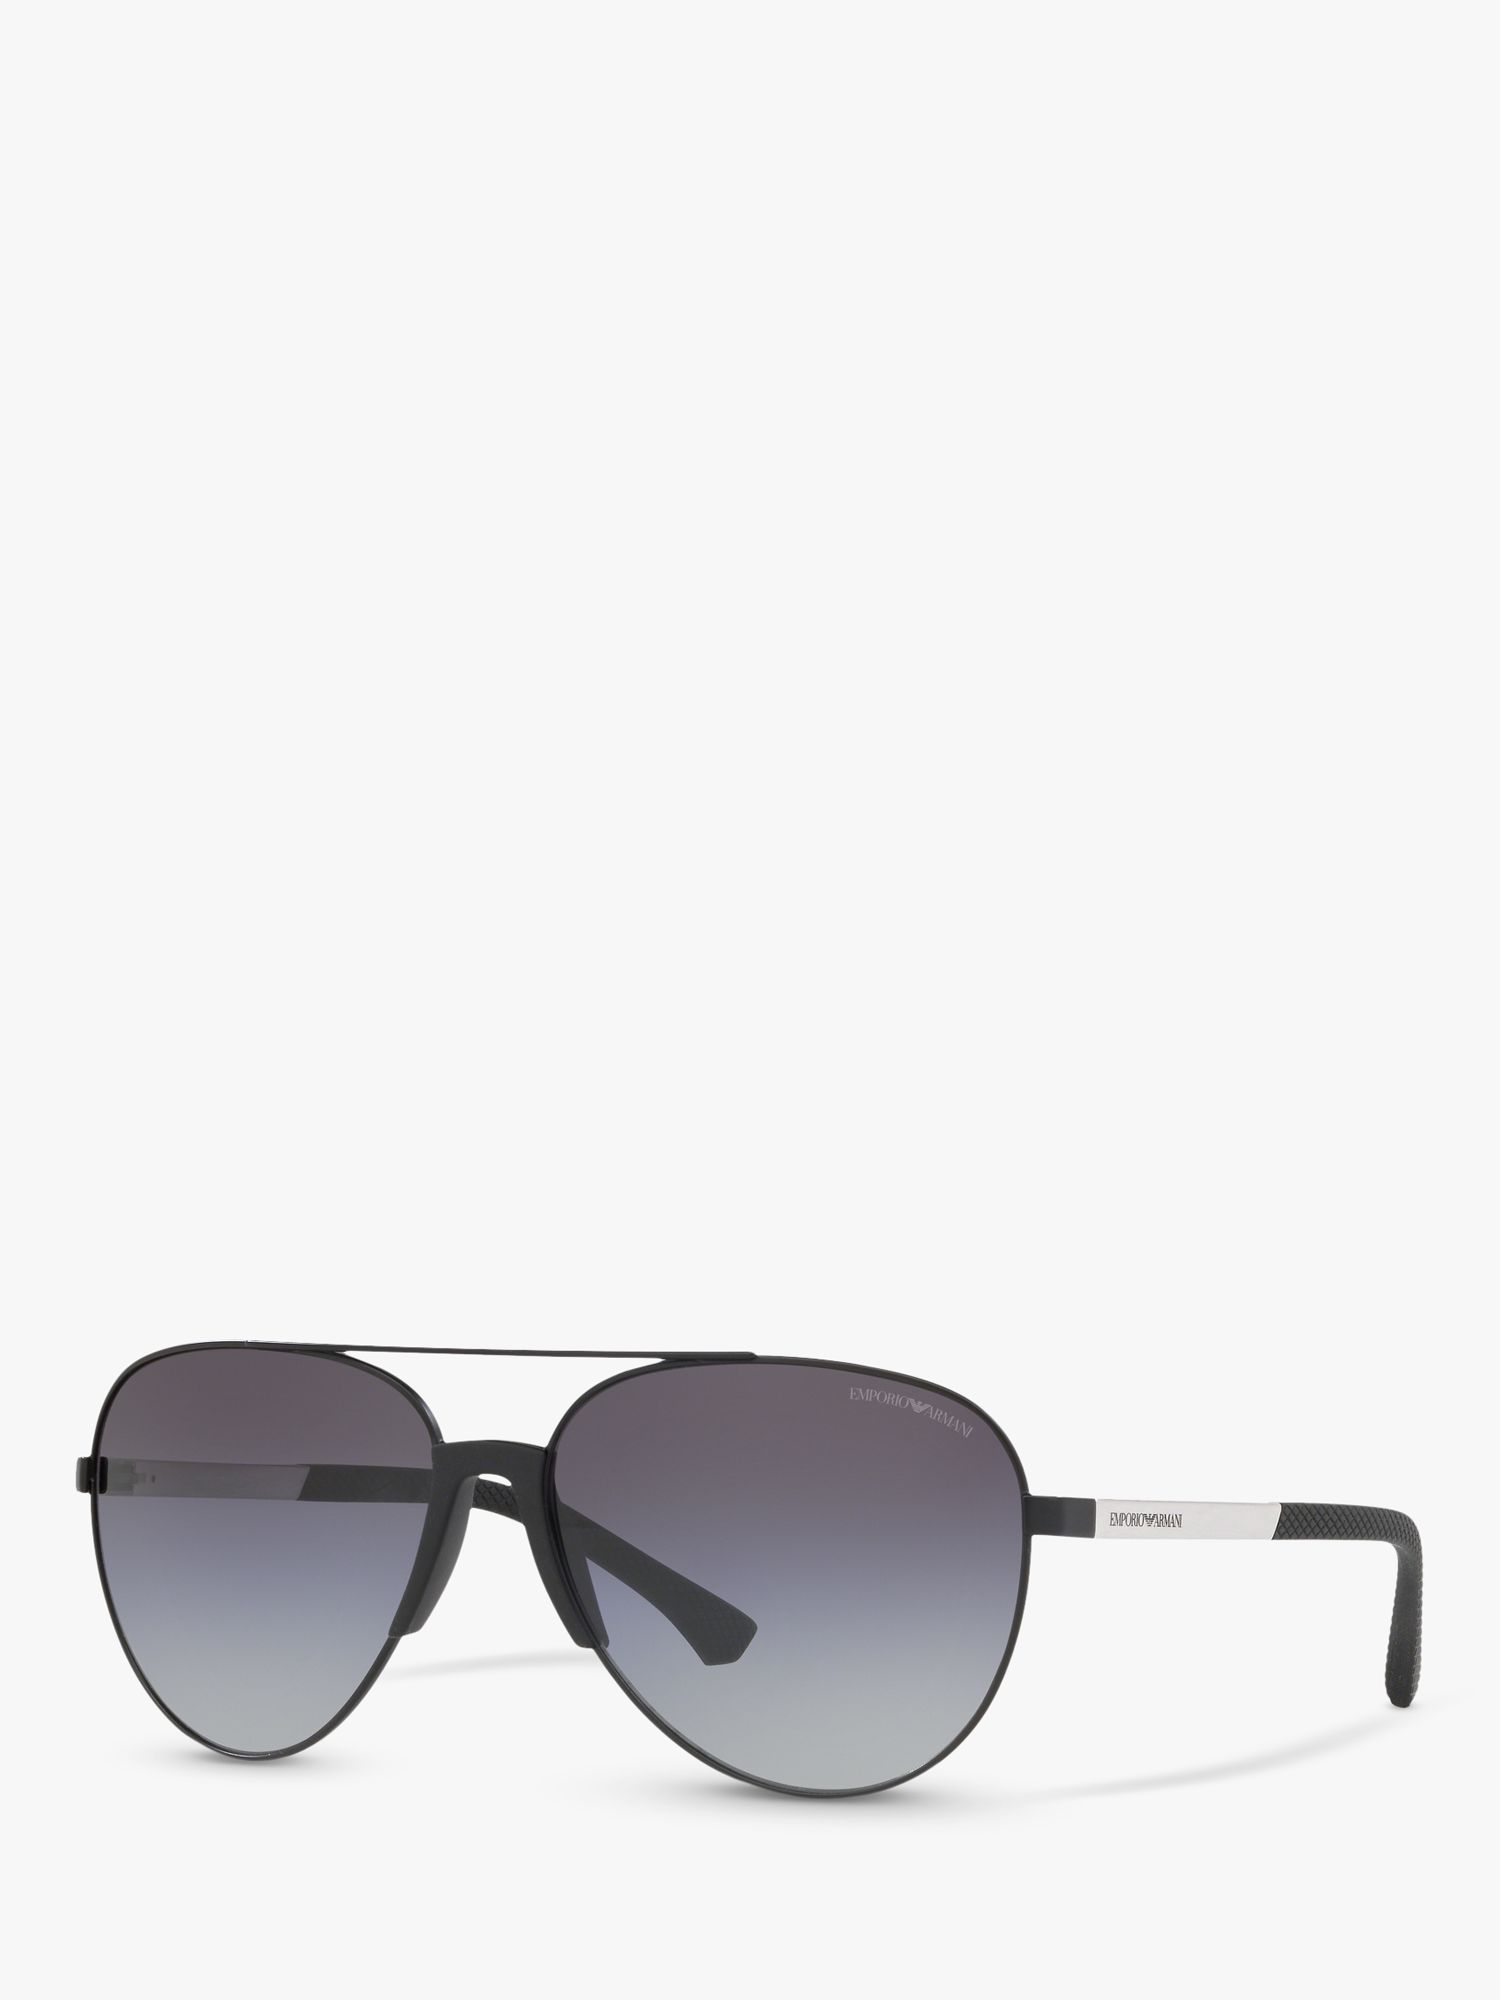 Emporio Armani EA2059 Men's Aviator Sunglasses, Matte Black/Grey Gradient  at John Lewis & Partners